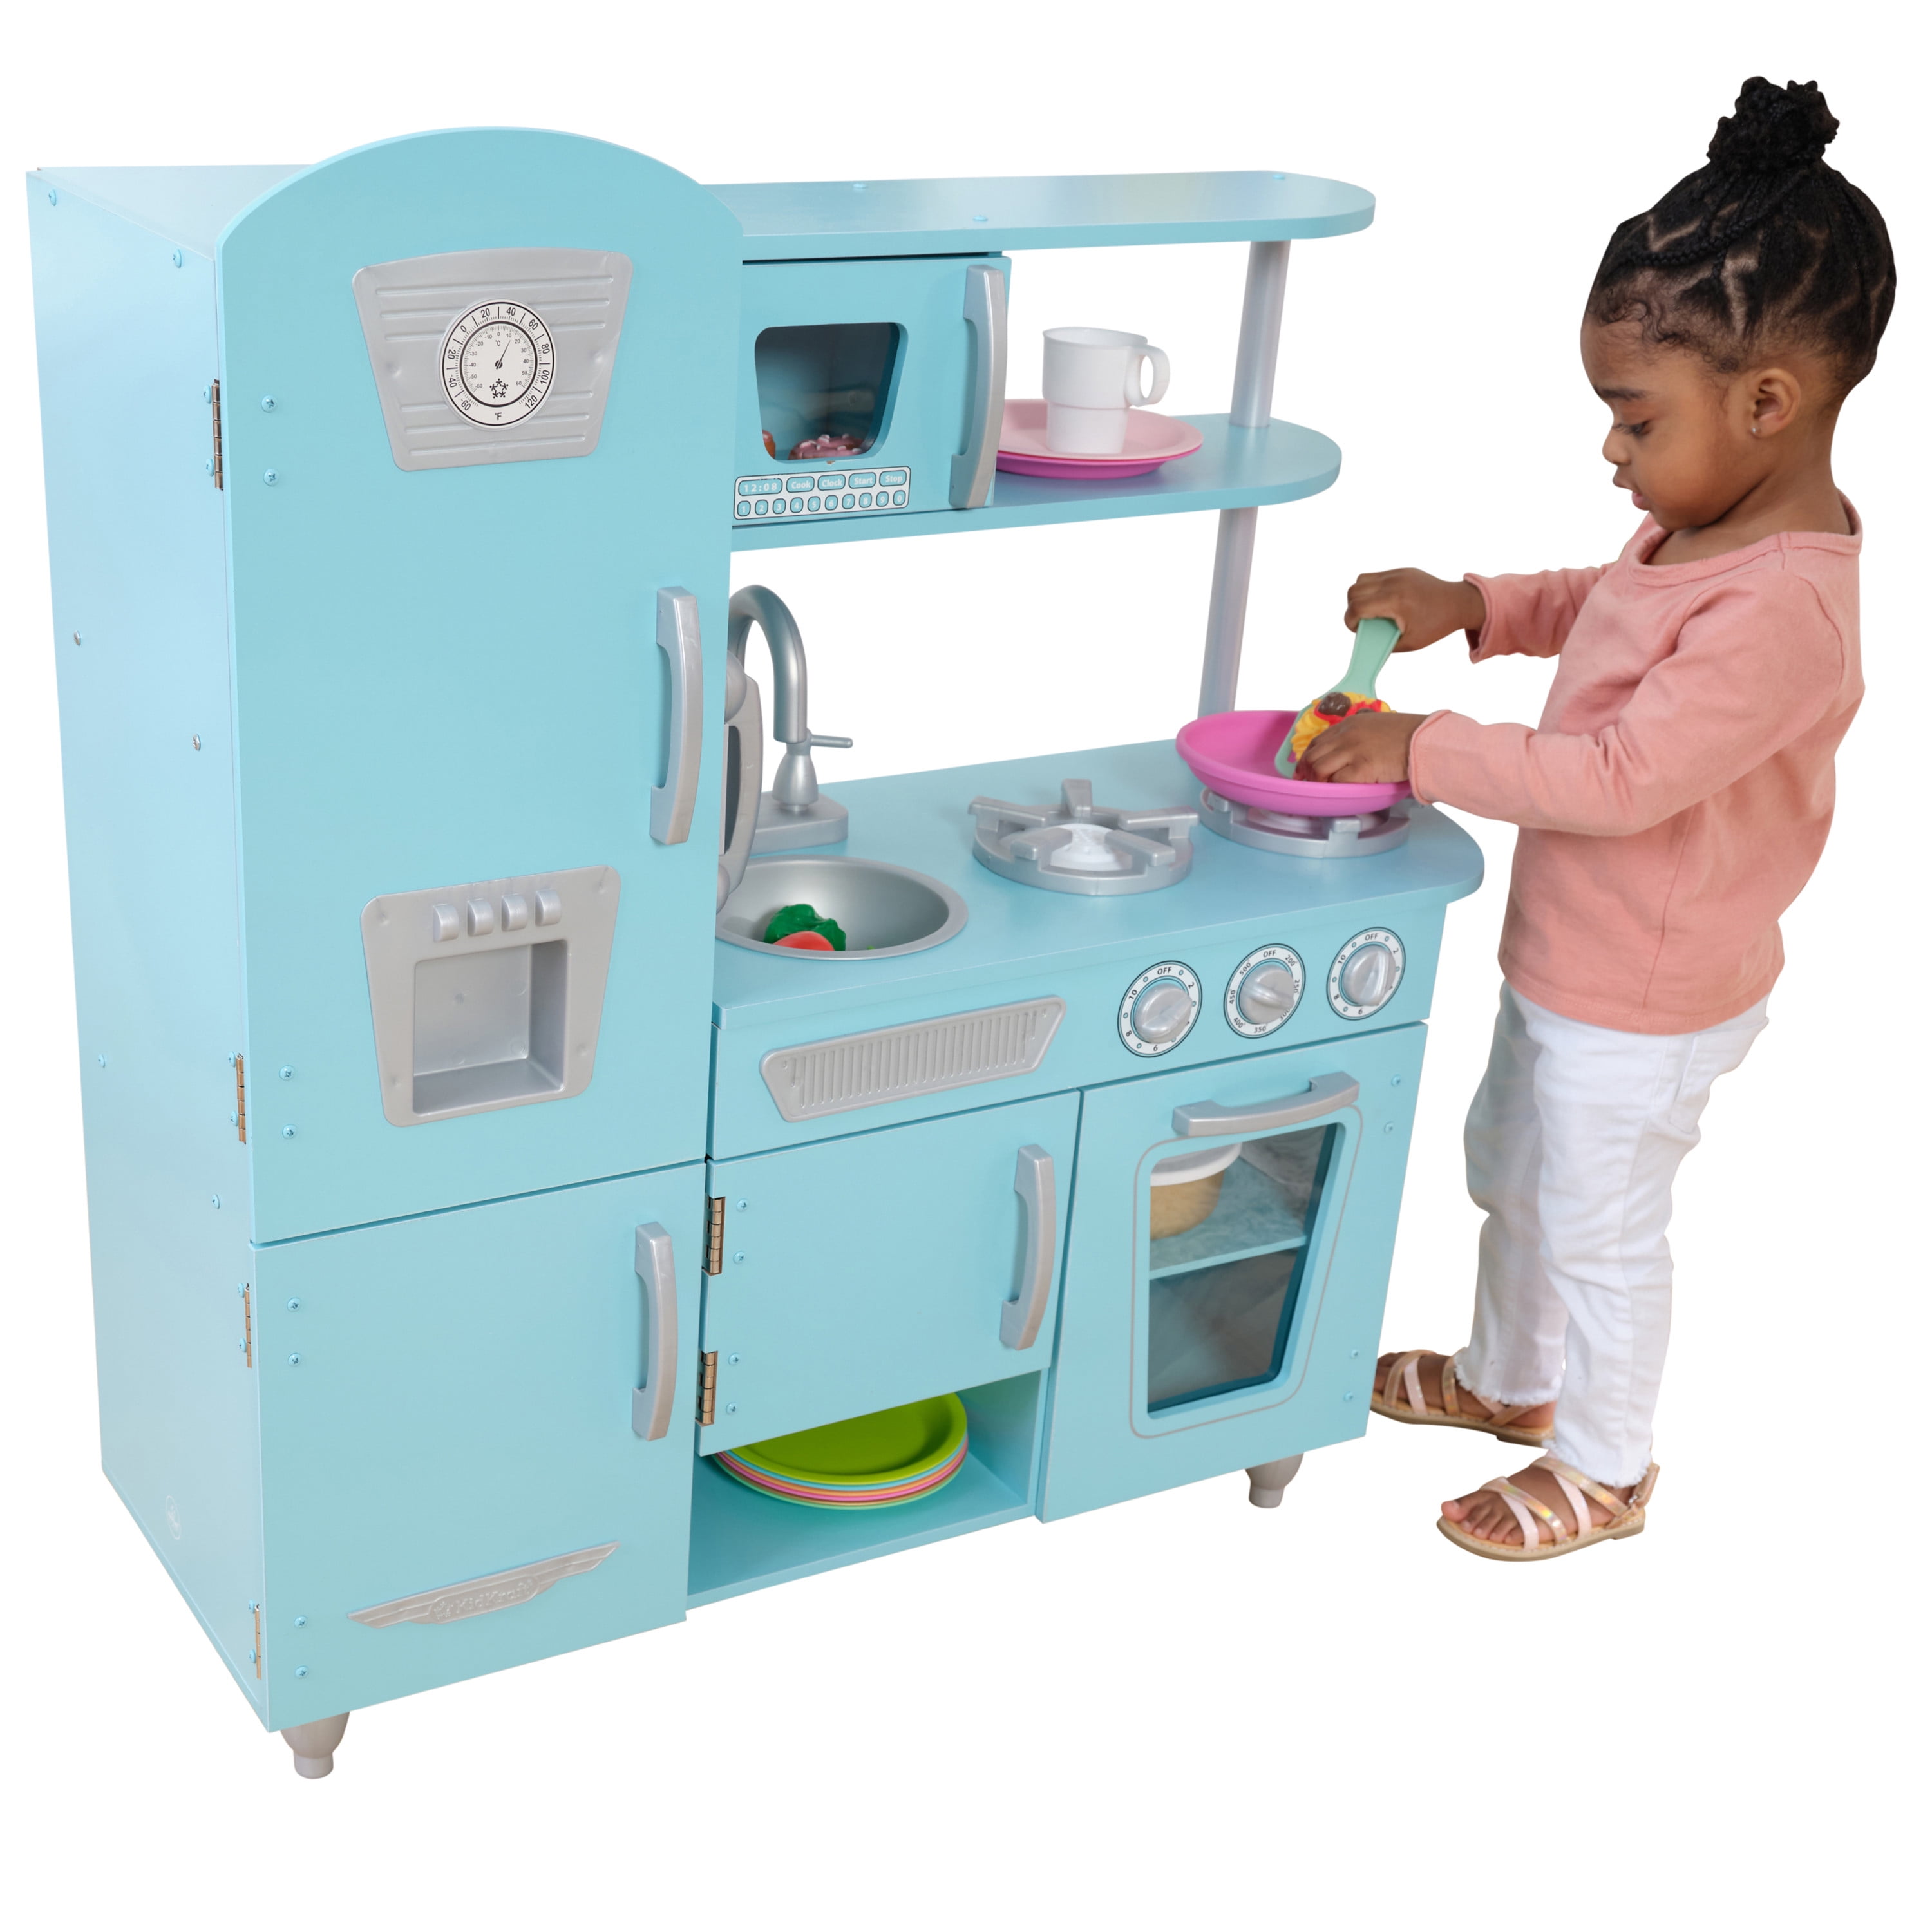 854800 Step2 Best Chef's Toy Kitchen Playset for sale online 